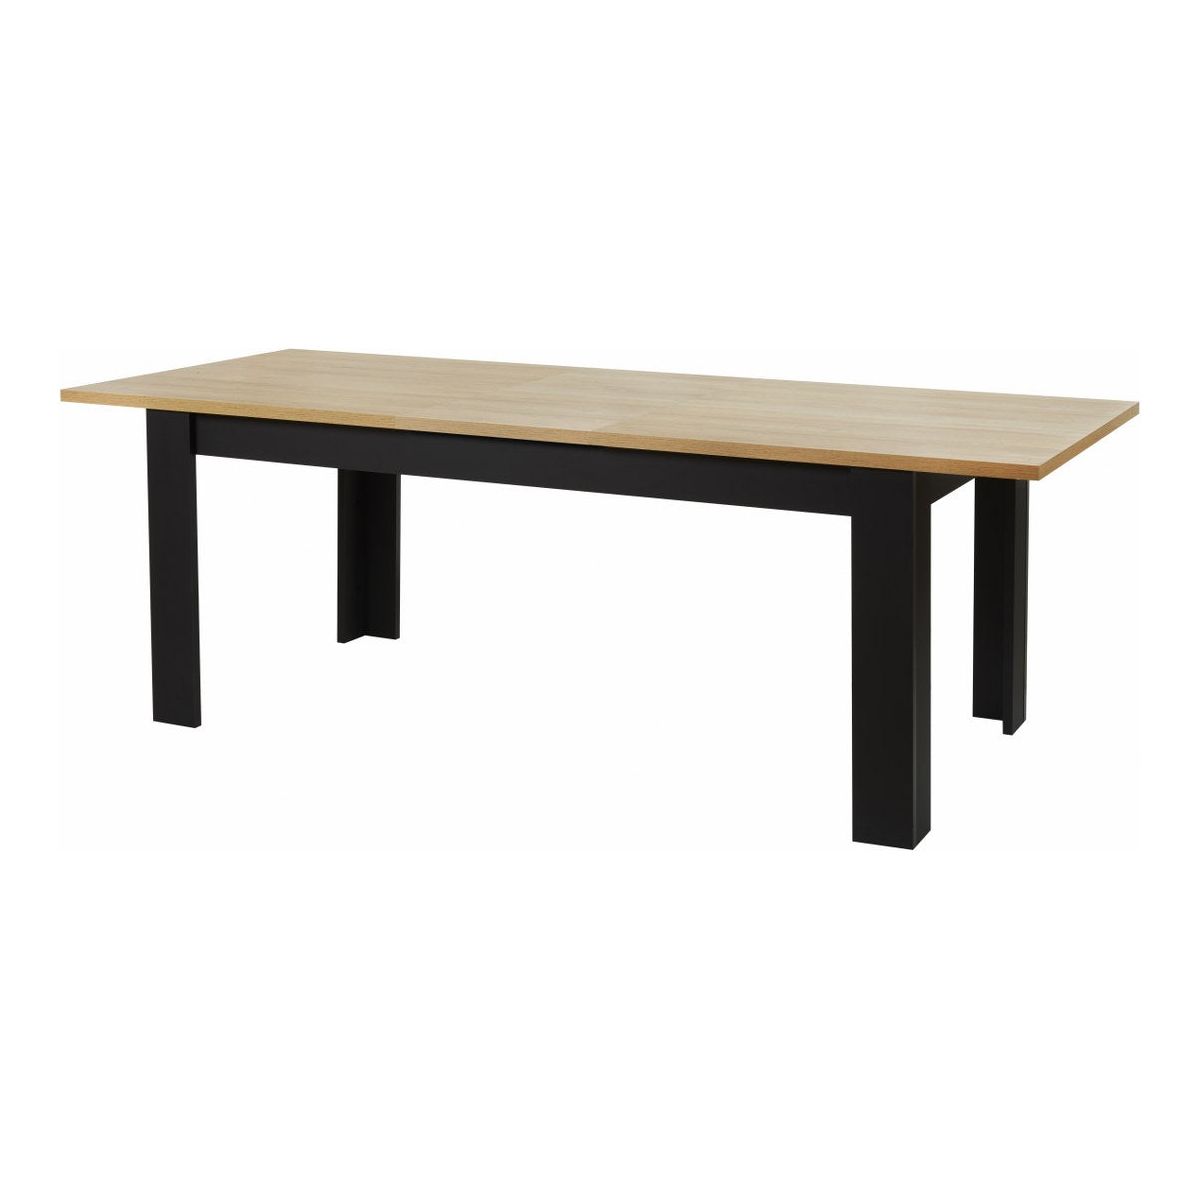 Table | Furniture series Highlight | brown, natural, black | 180